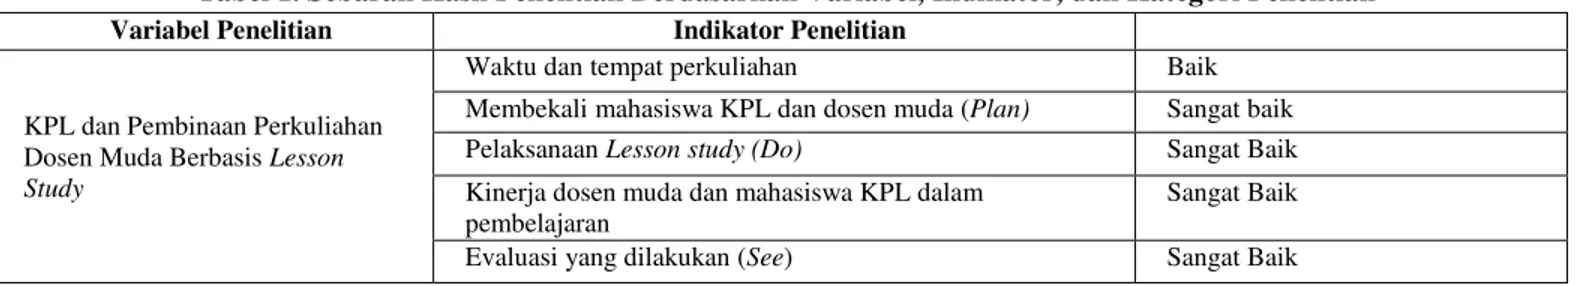 Tabel 1. Sebaran Hasil Penelitian Berdasarkan Variabel, Indikator, dan Kategori Penelitian 